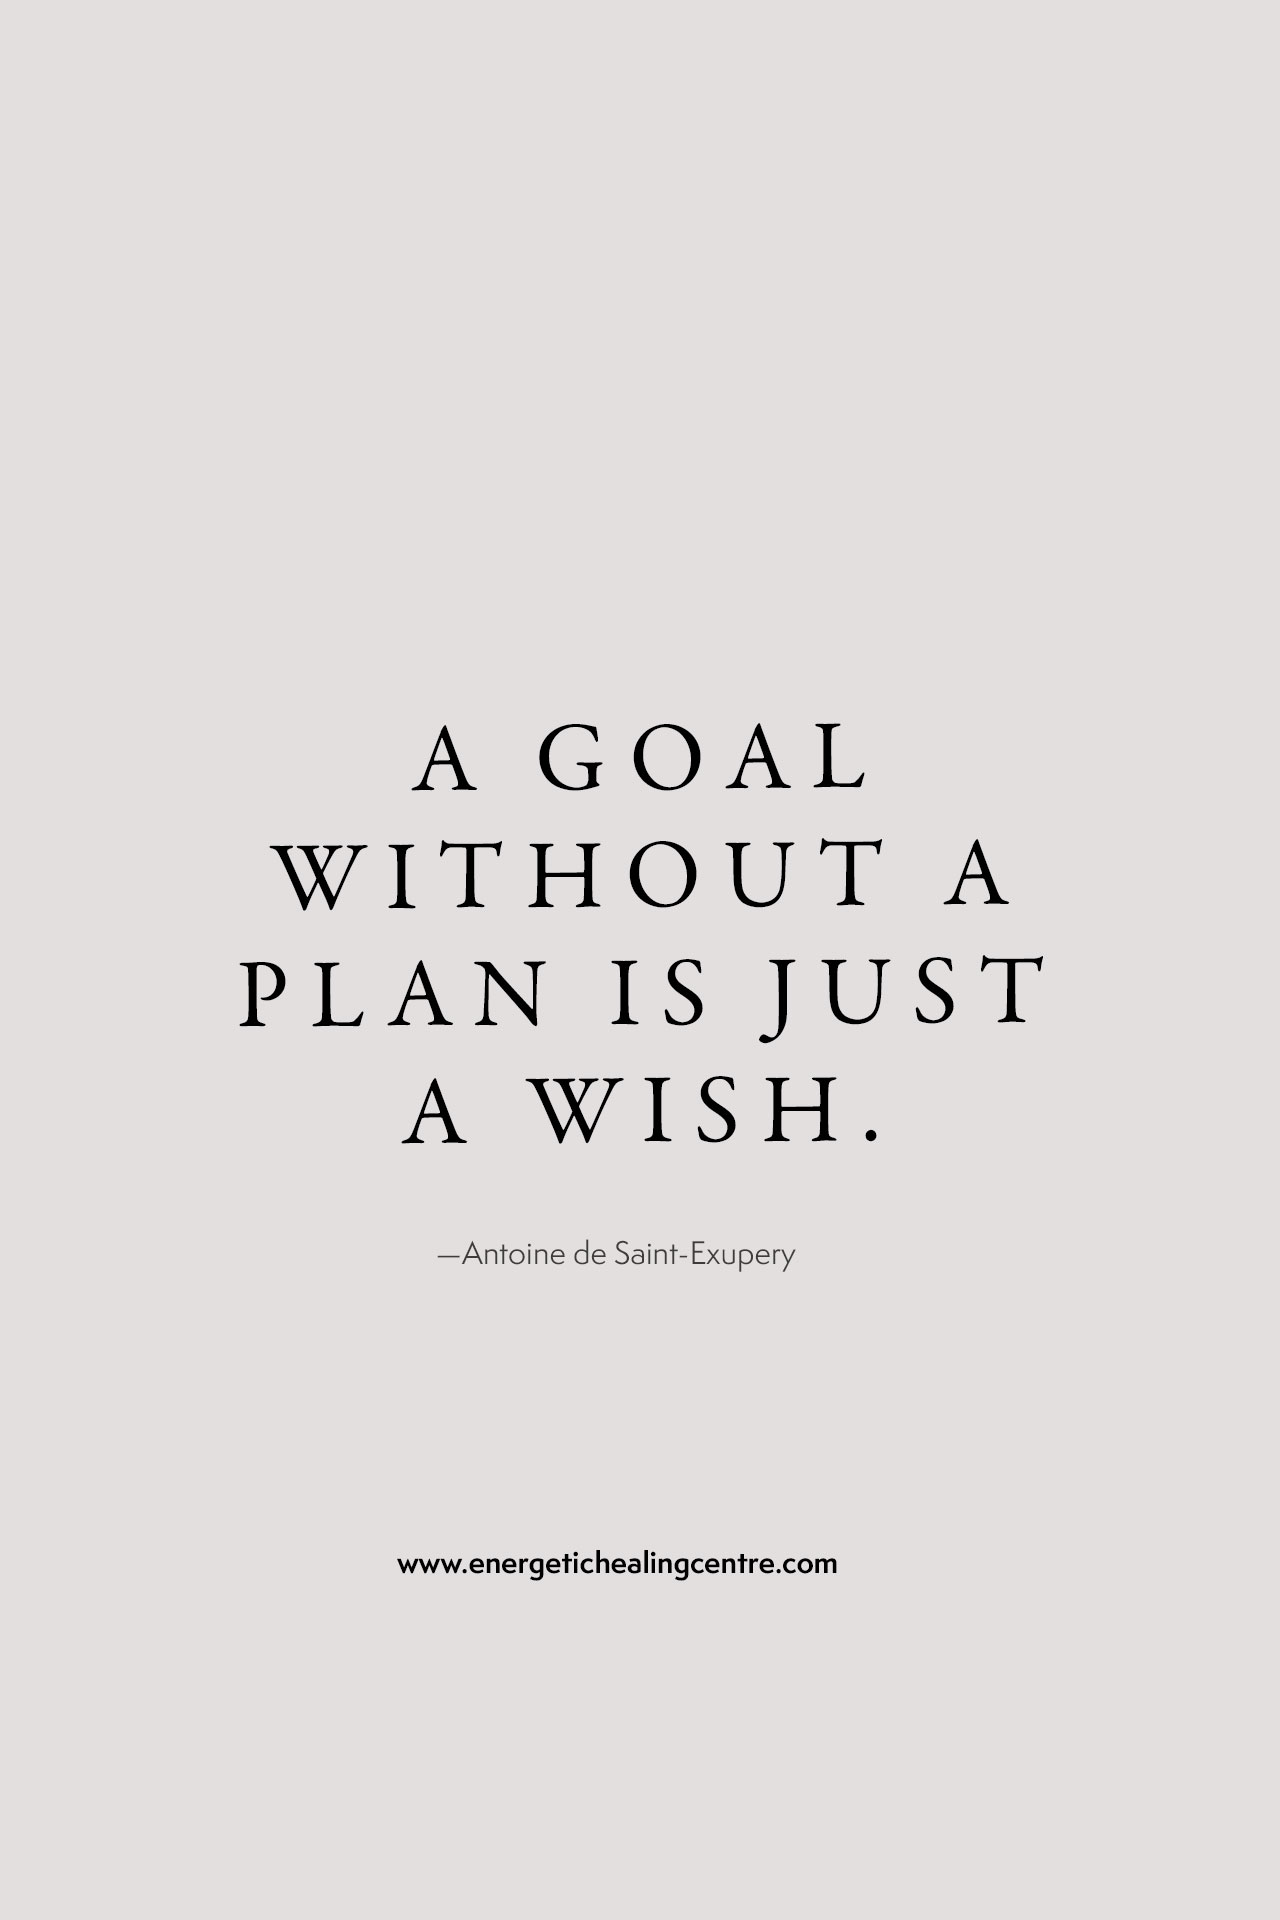 “A goal without a plan is just a wish” – Antoine de Saint-Exupery